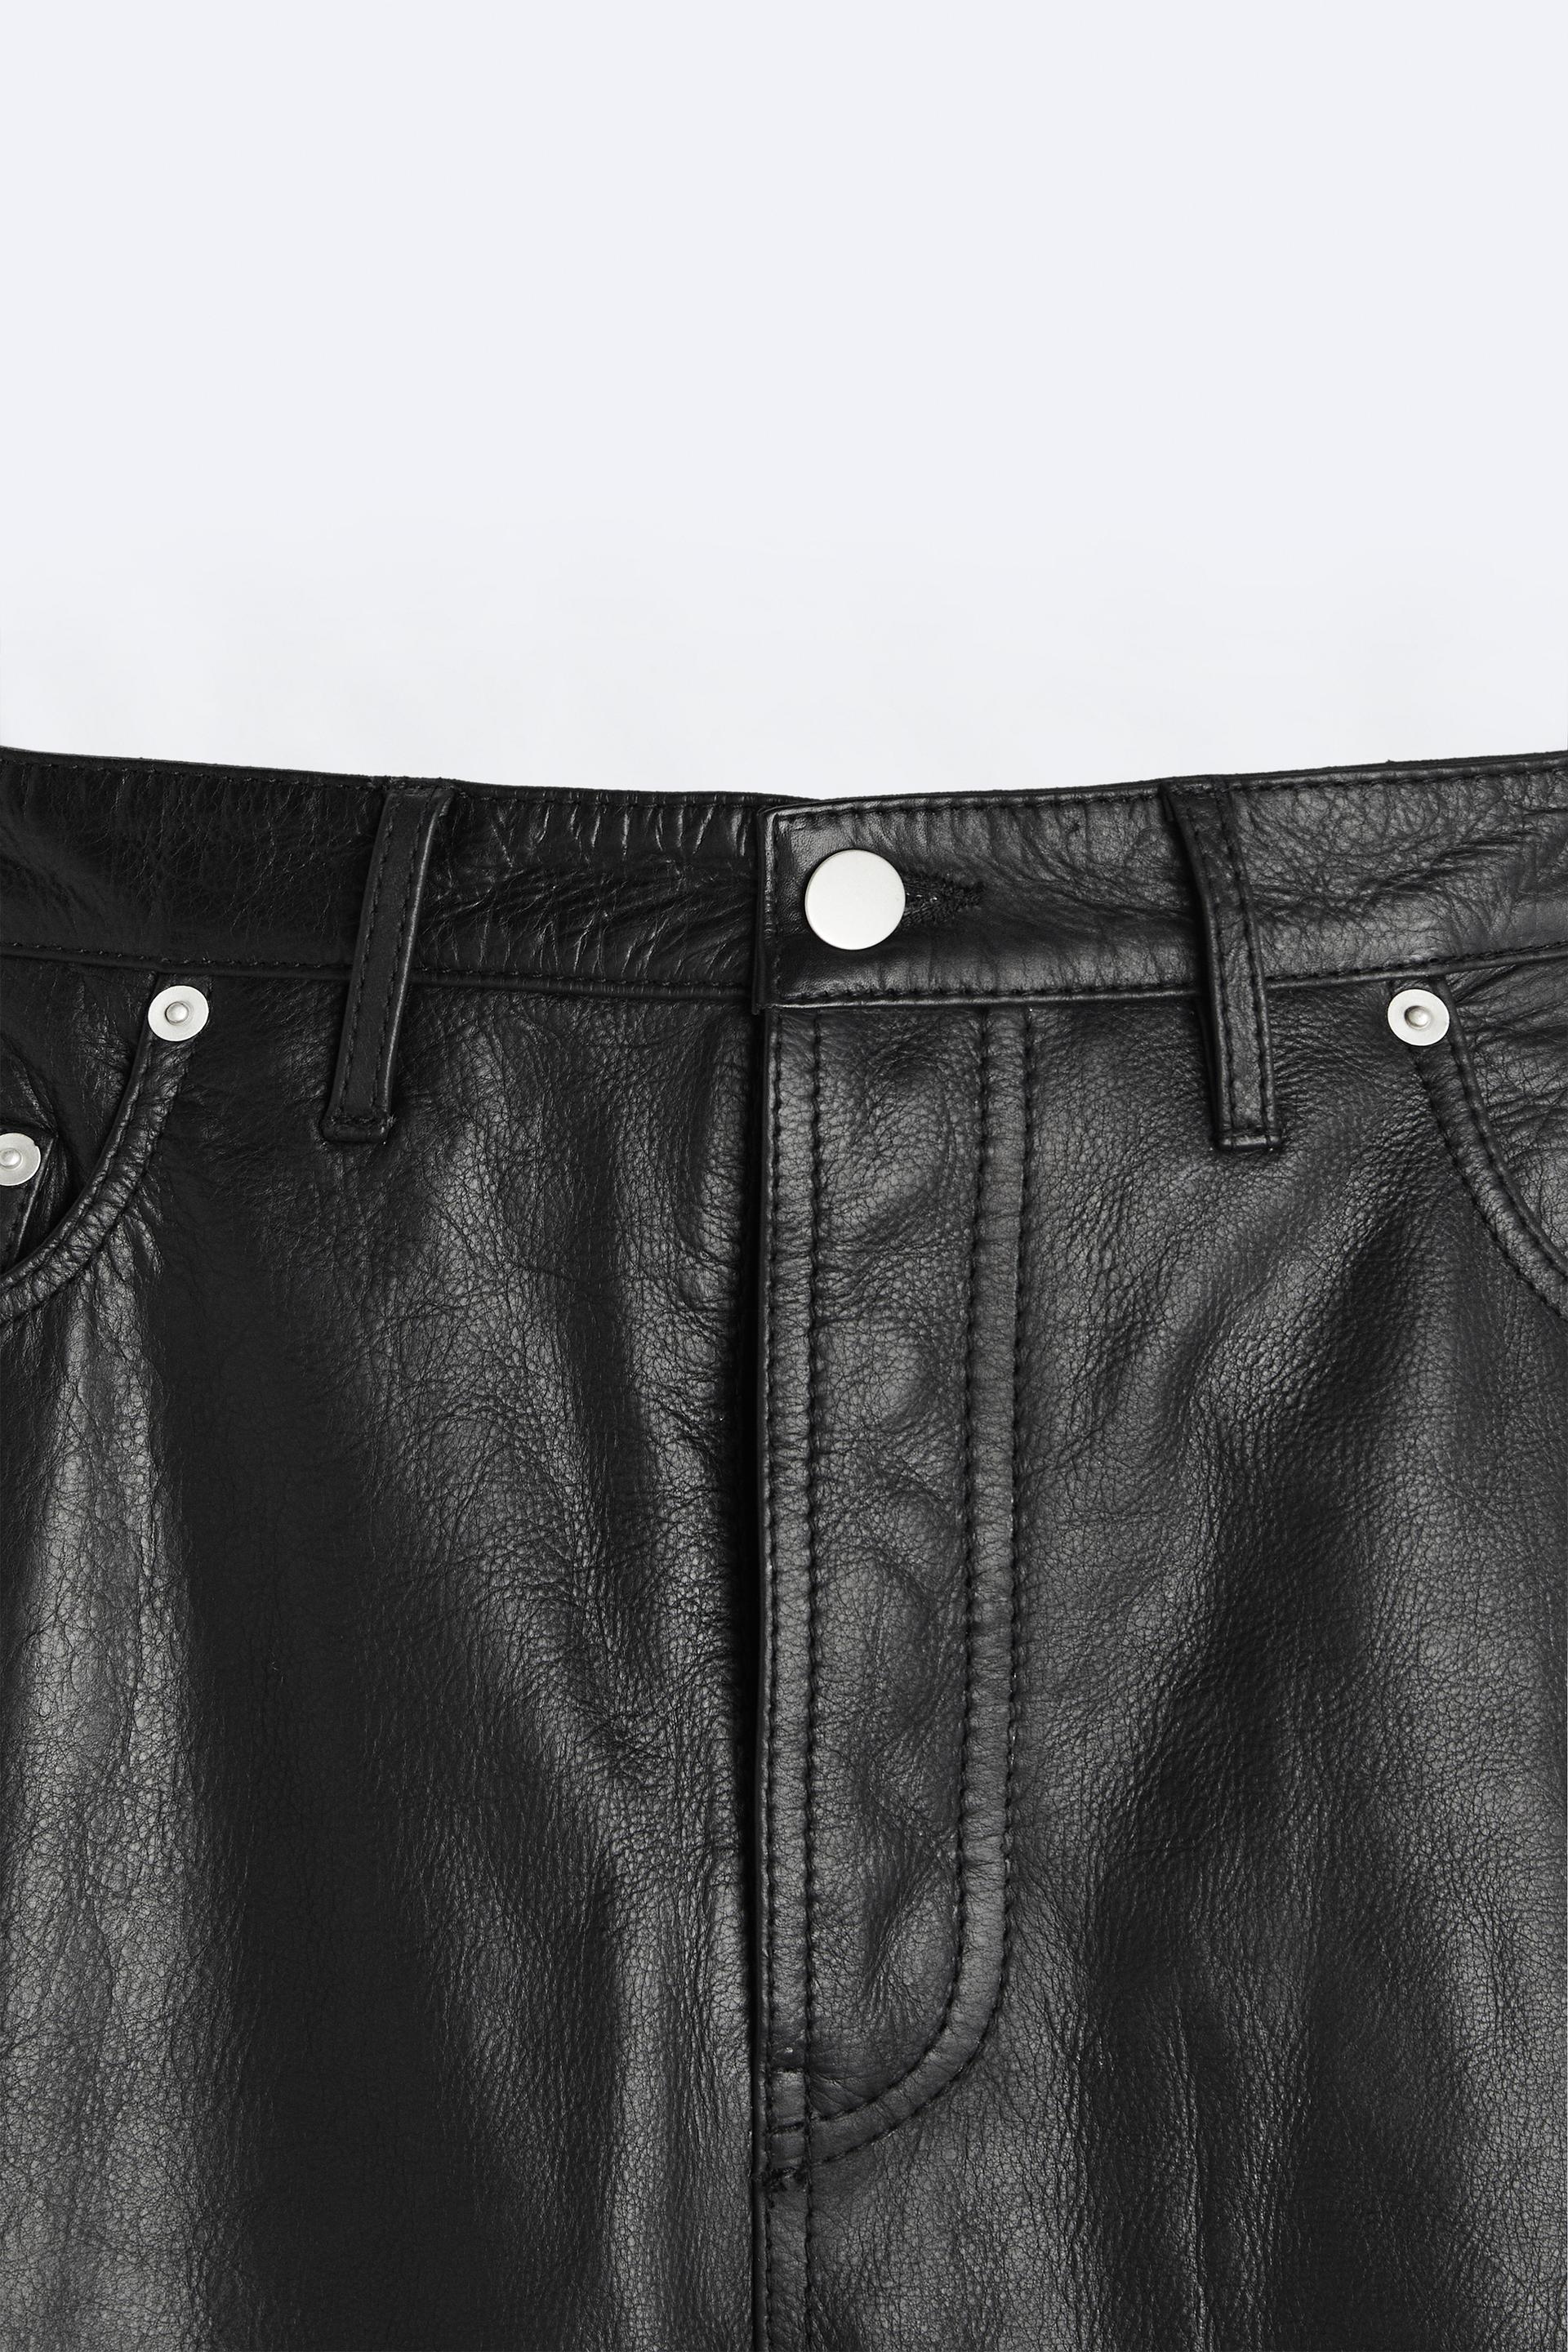 Zara Leather Trousers & Pants - Men